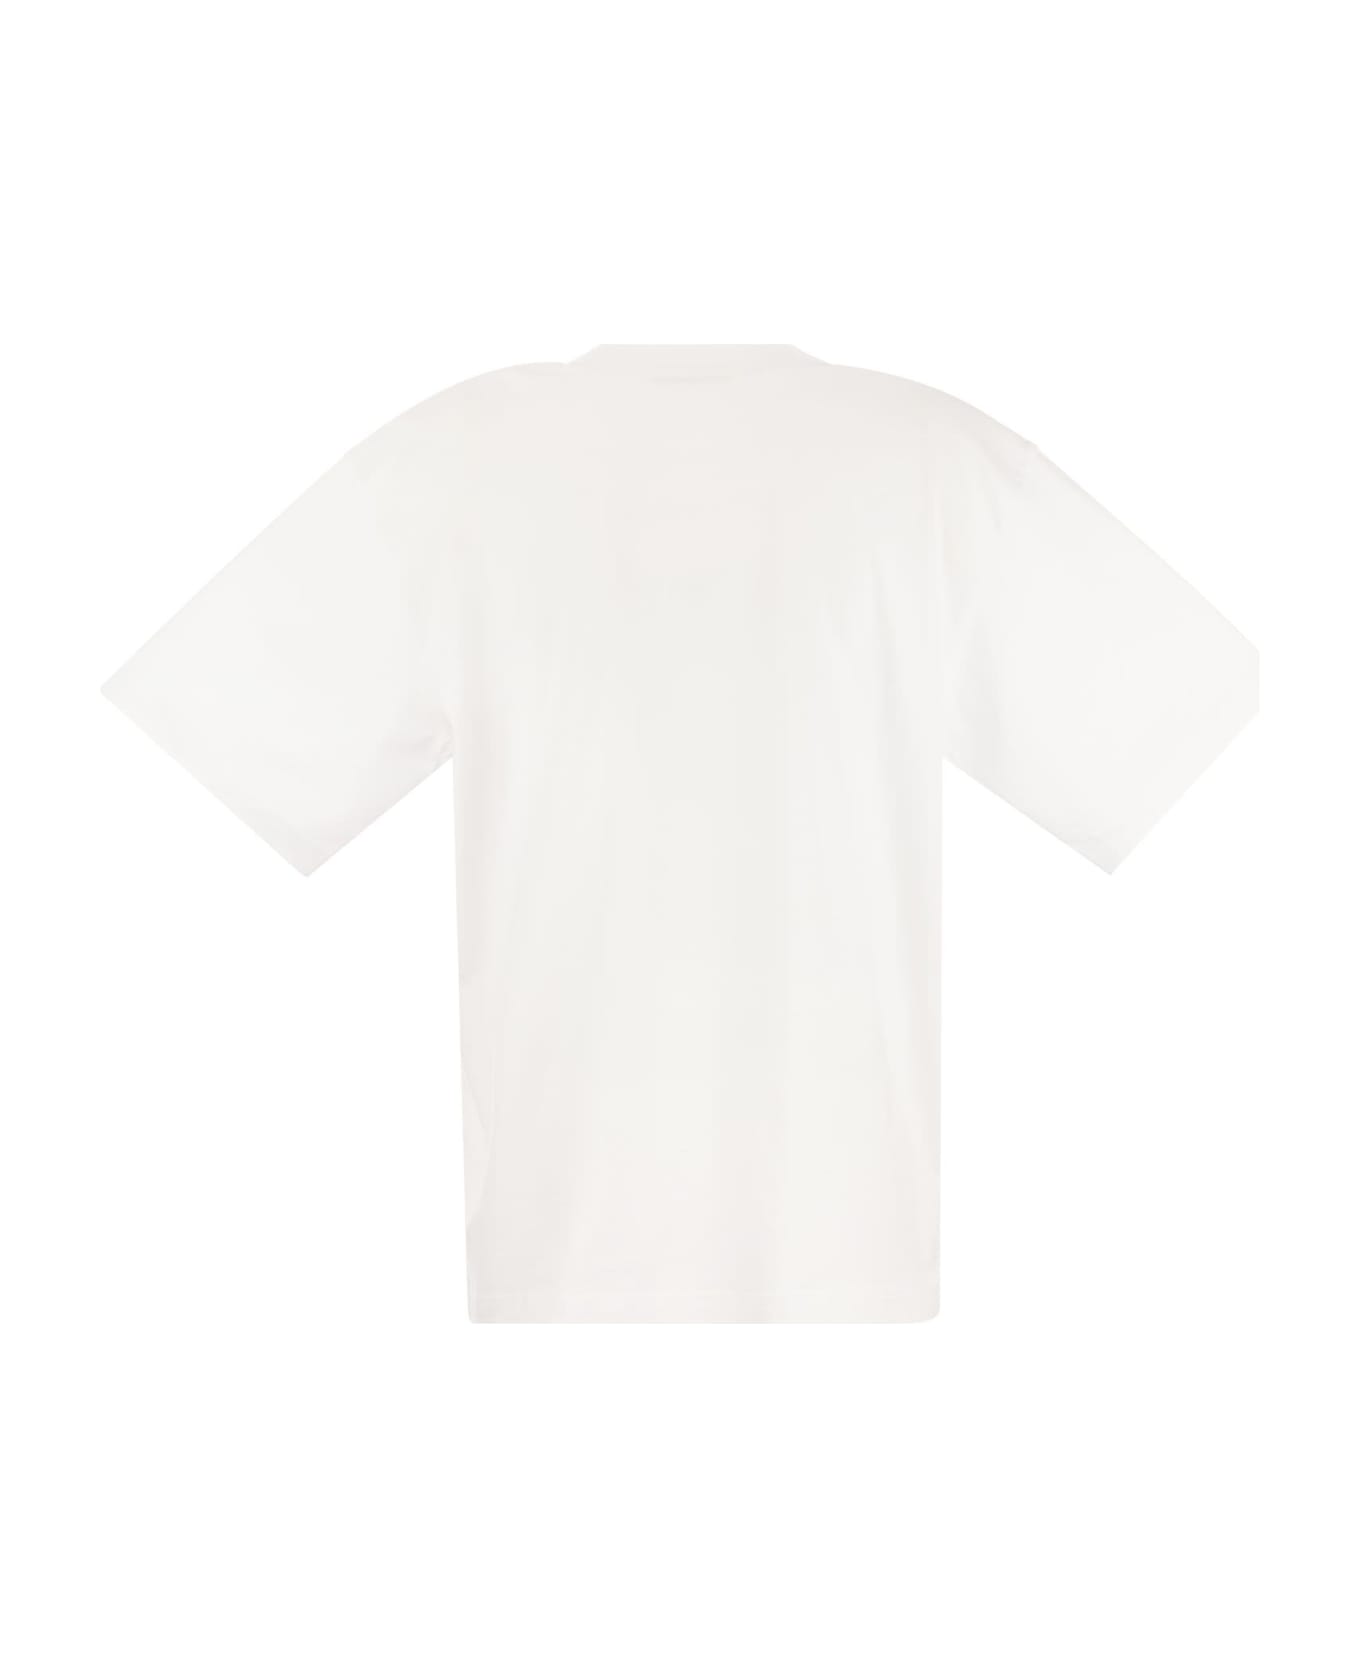 Marni Cotton Jersey T-shirt With Marni Print - White Tシャツ